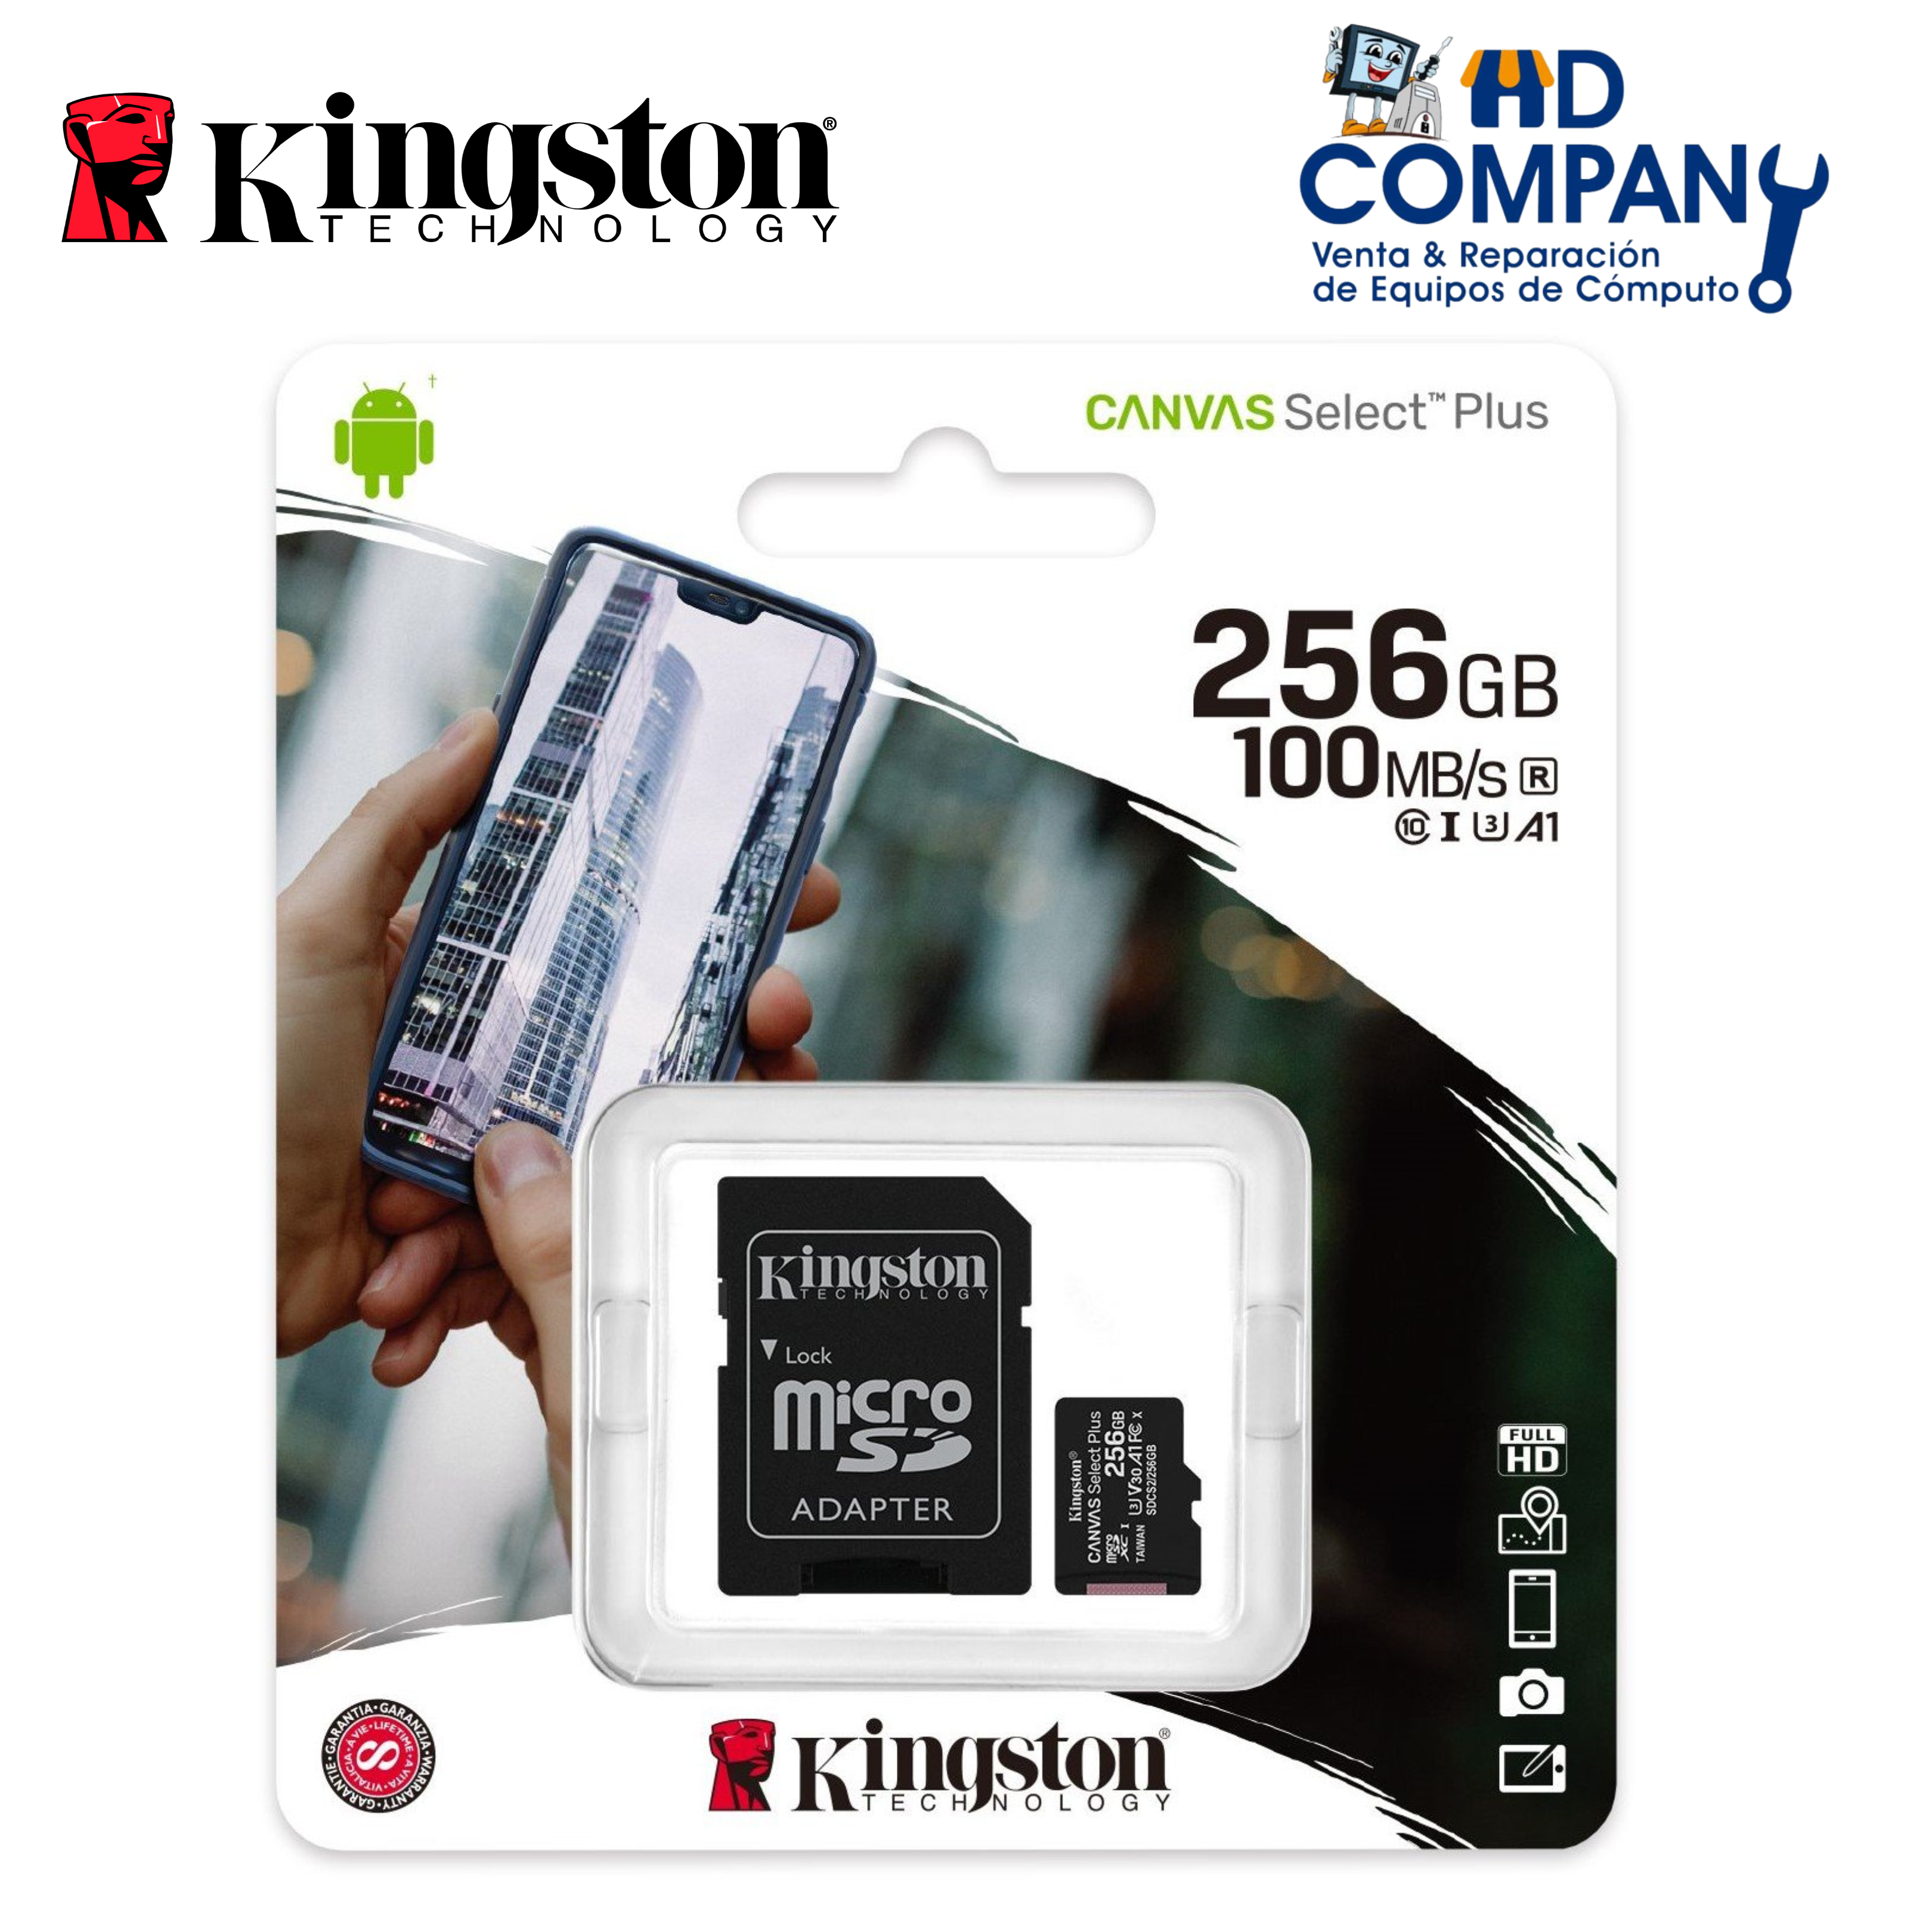 Memoria KINGSTON micro sd CANVAS PLUS 256GB clase 10